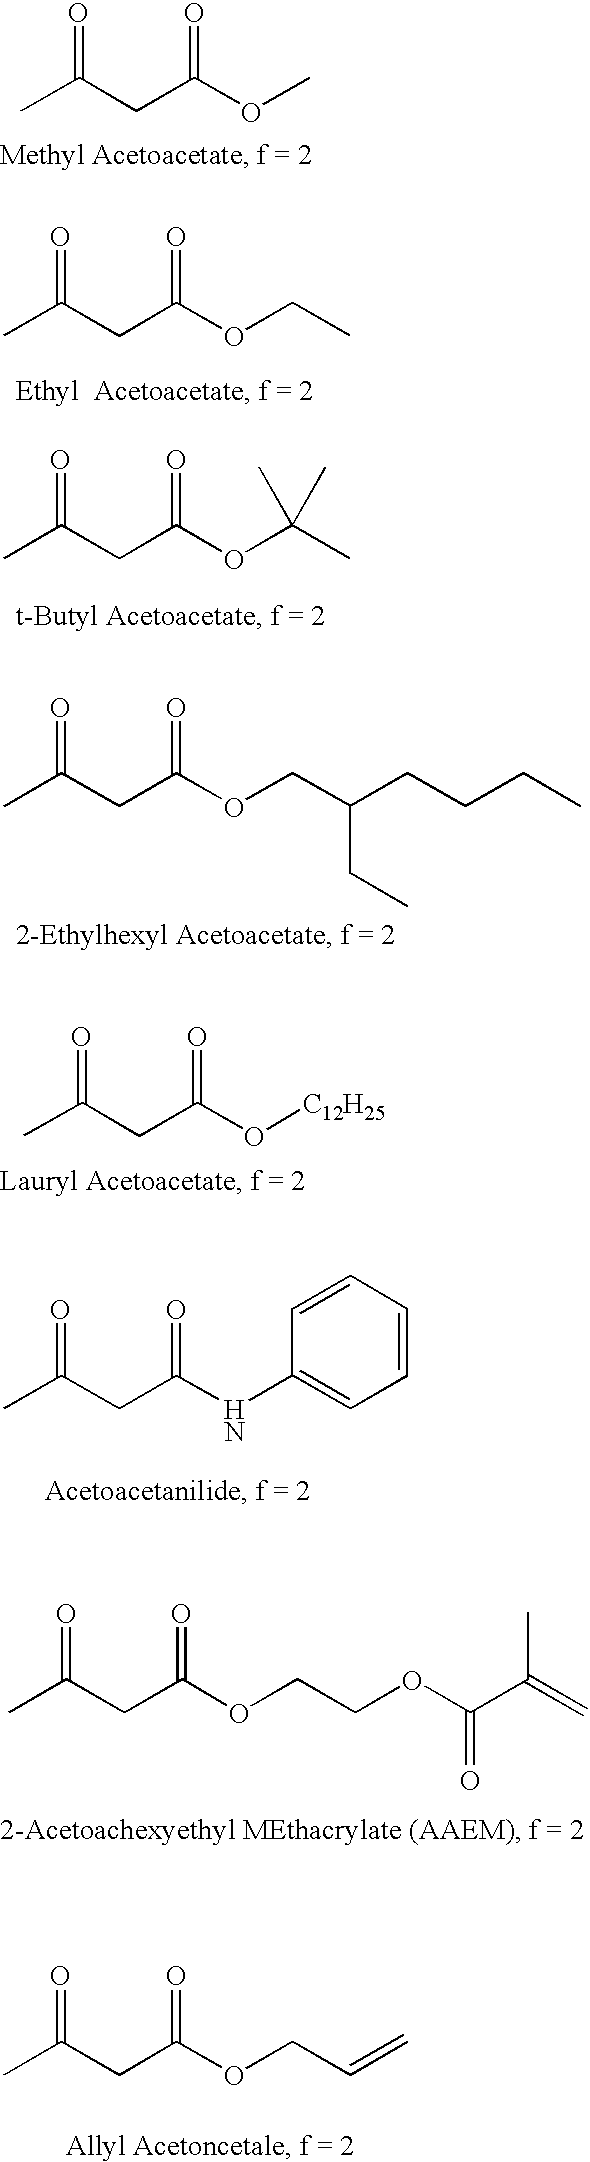 Self-photoinitiating multifunctional acrylates